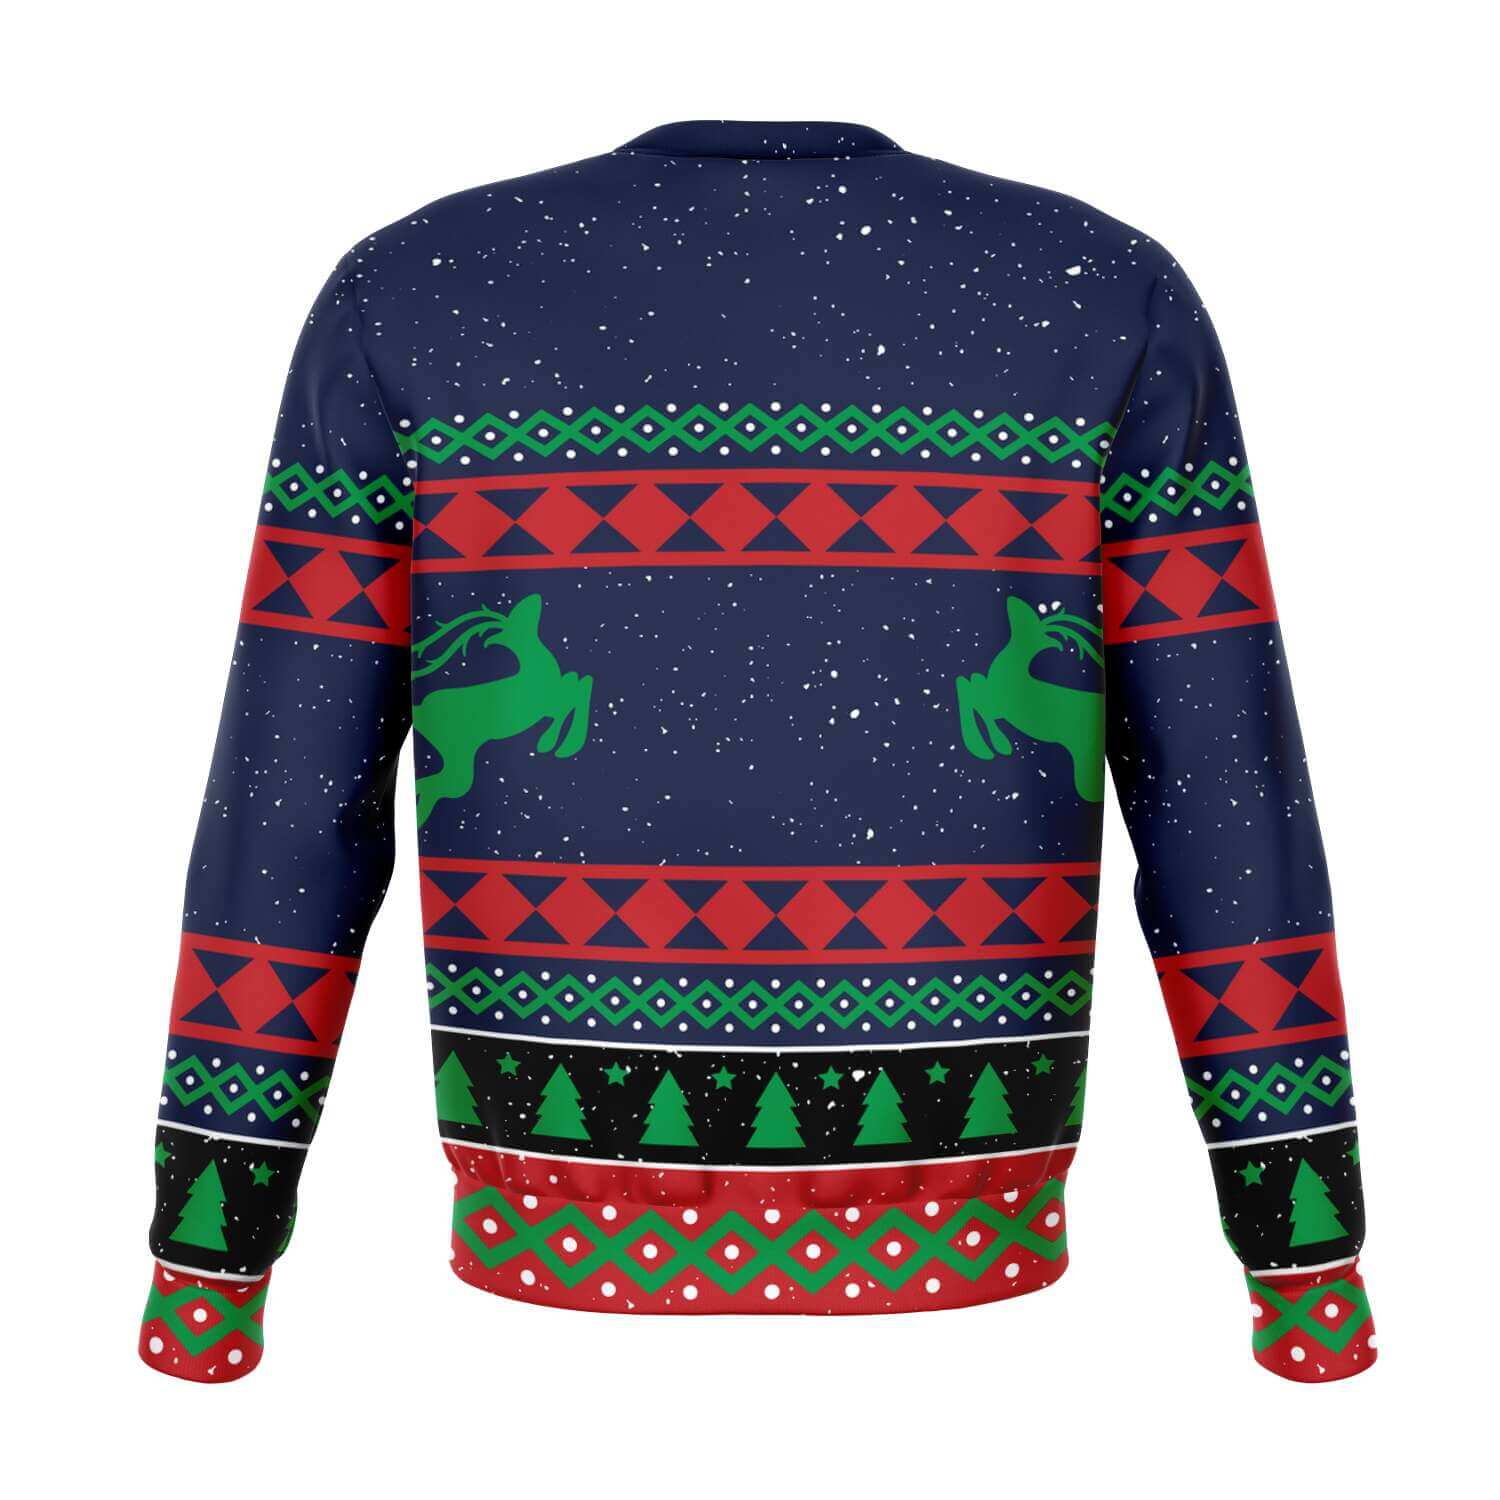 What-the-Elf-Athletic-Fashion-sweatshirt